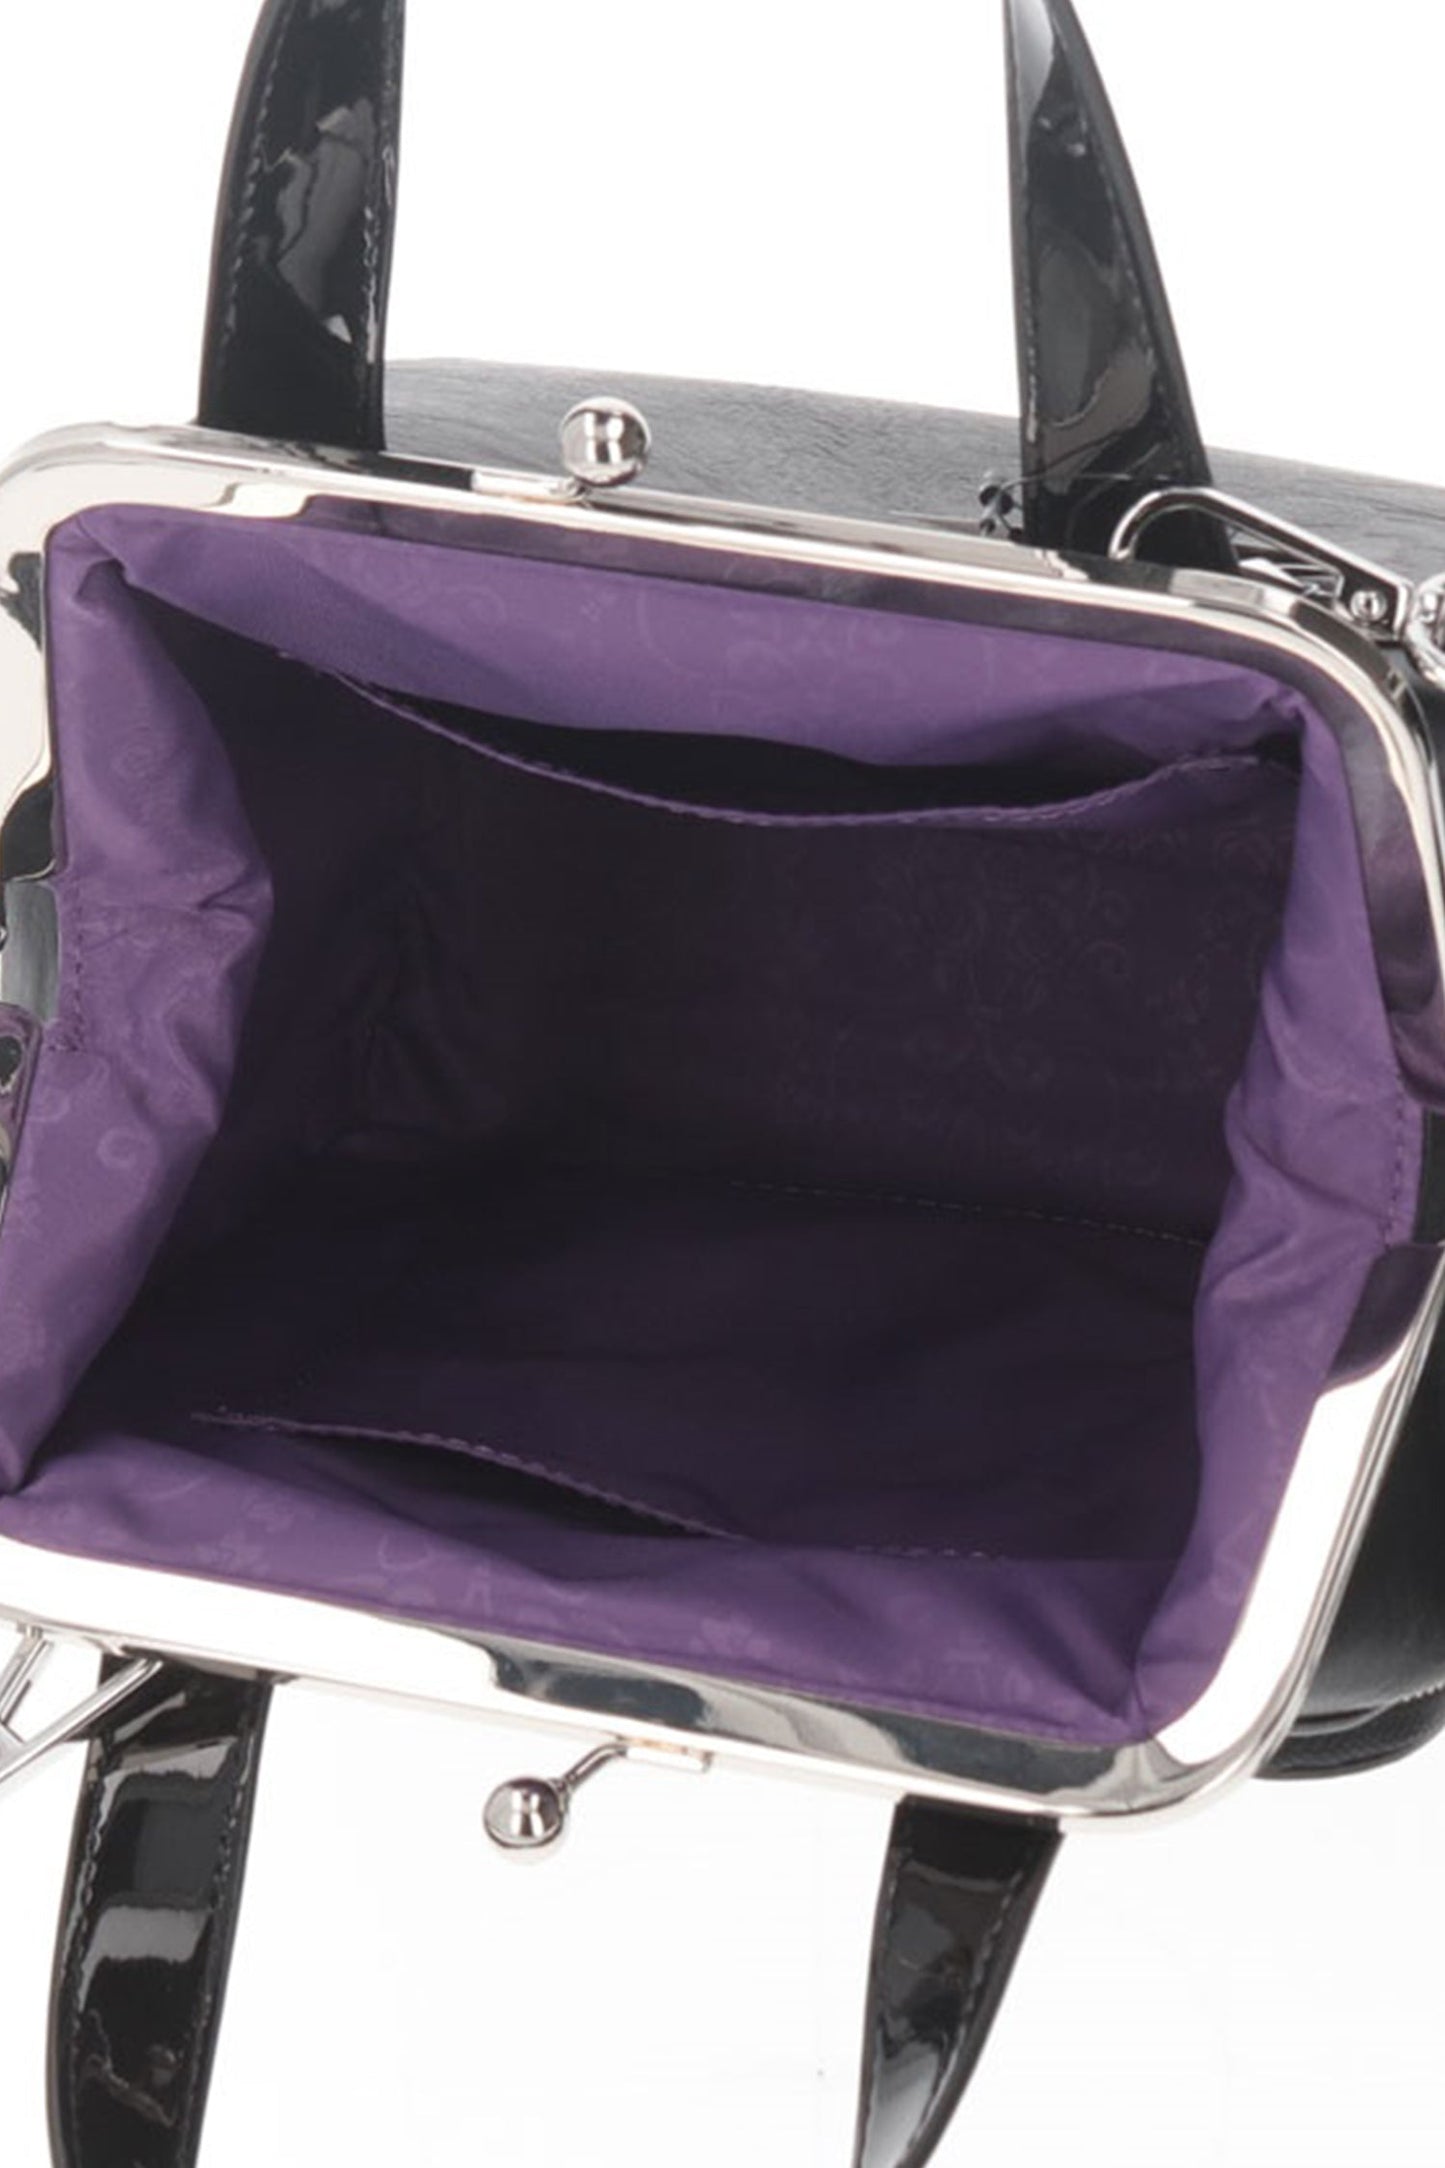 Metallica Clasp Crossbody Bag Black open is Purple with plenty of space to carry your belonging